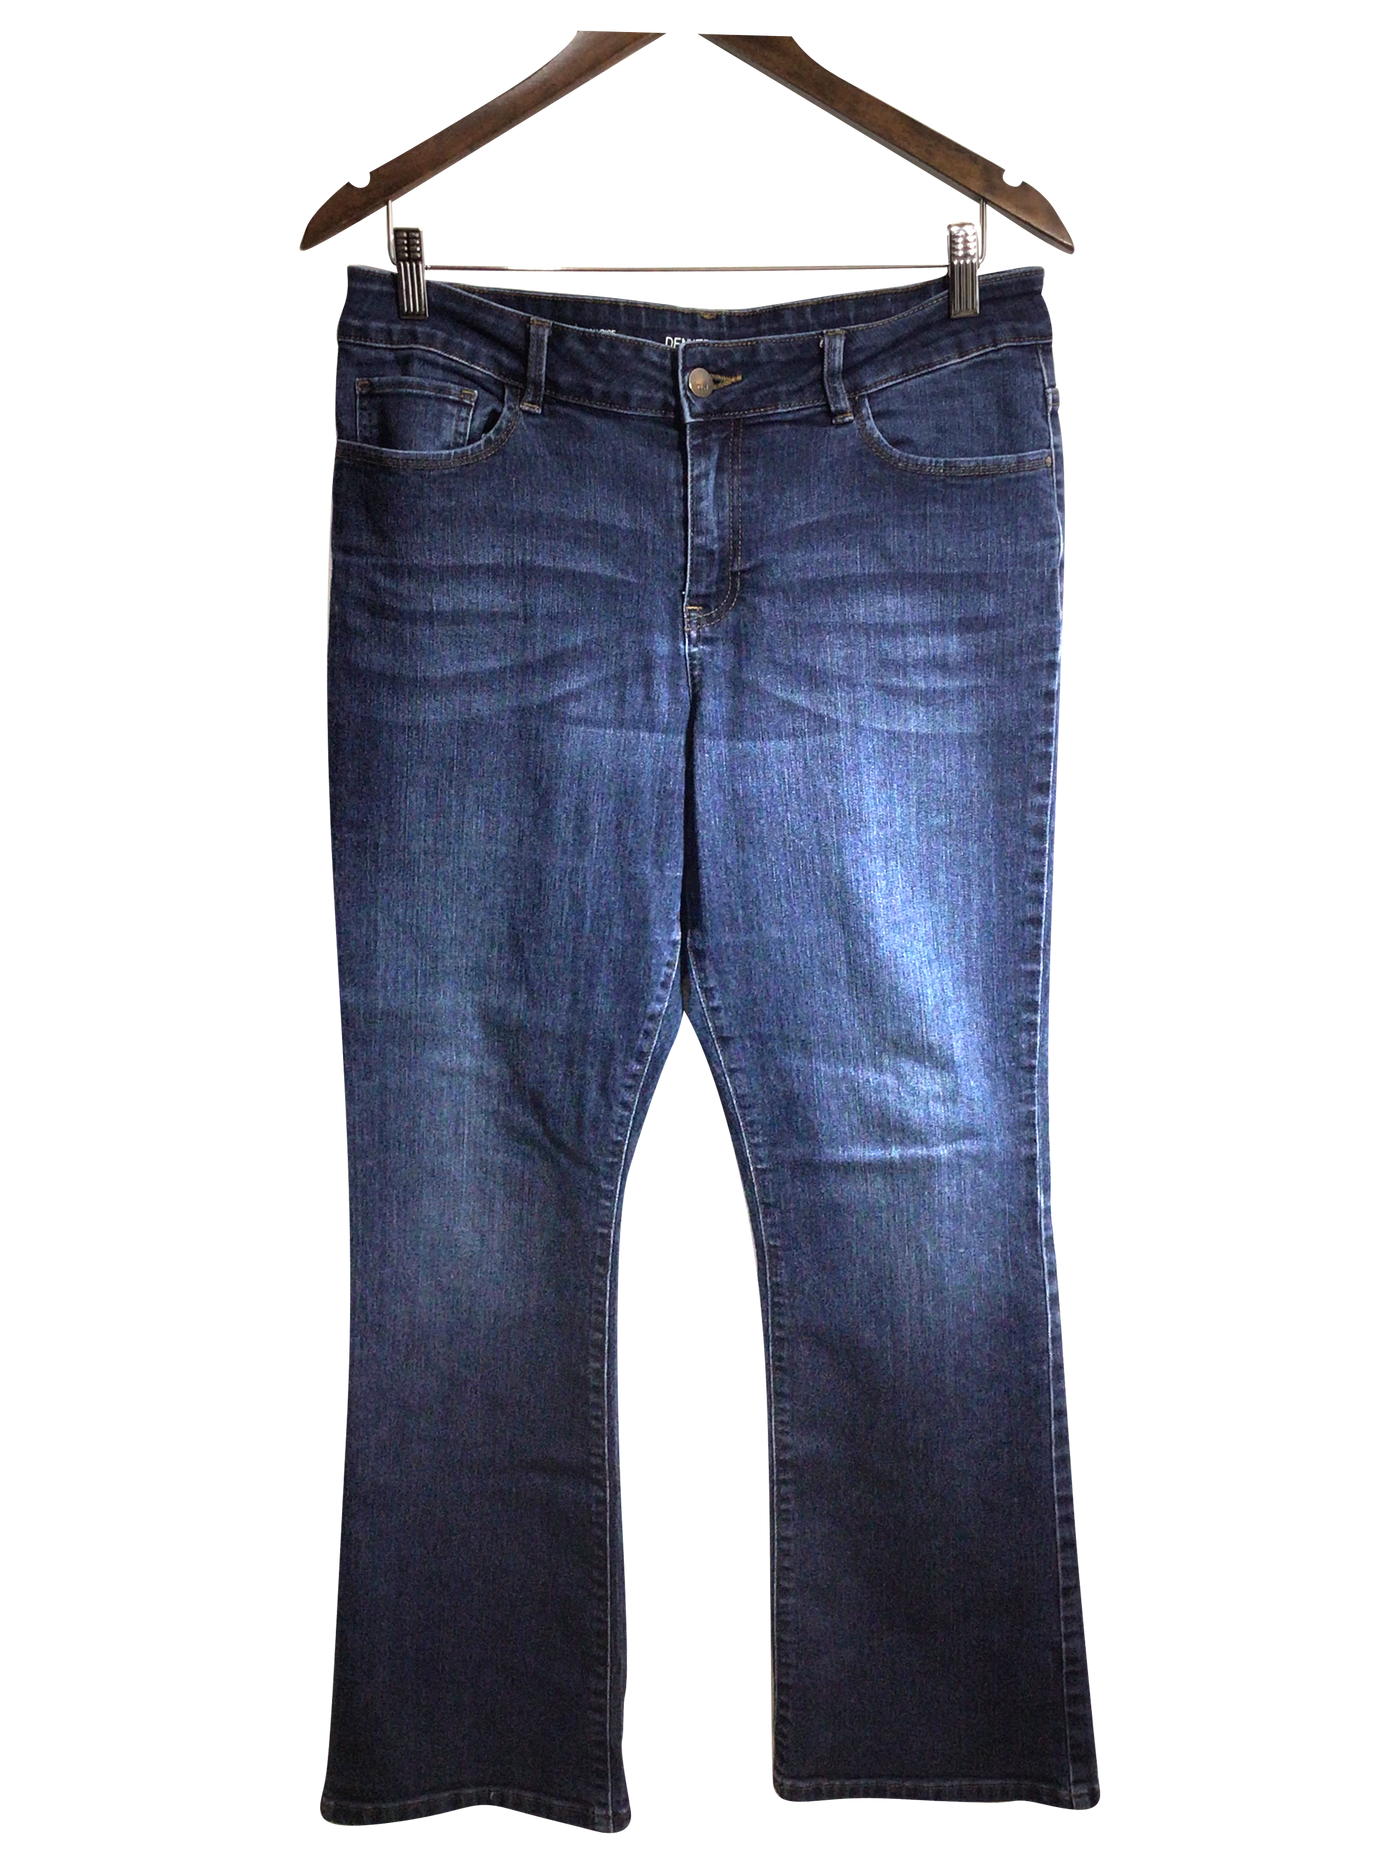 DENVER HAYES Women Straight-Legged Jeans Regular fit in Blue - Size 10x30 | 18.29 $ KOOP